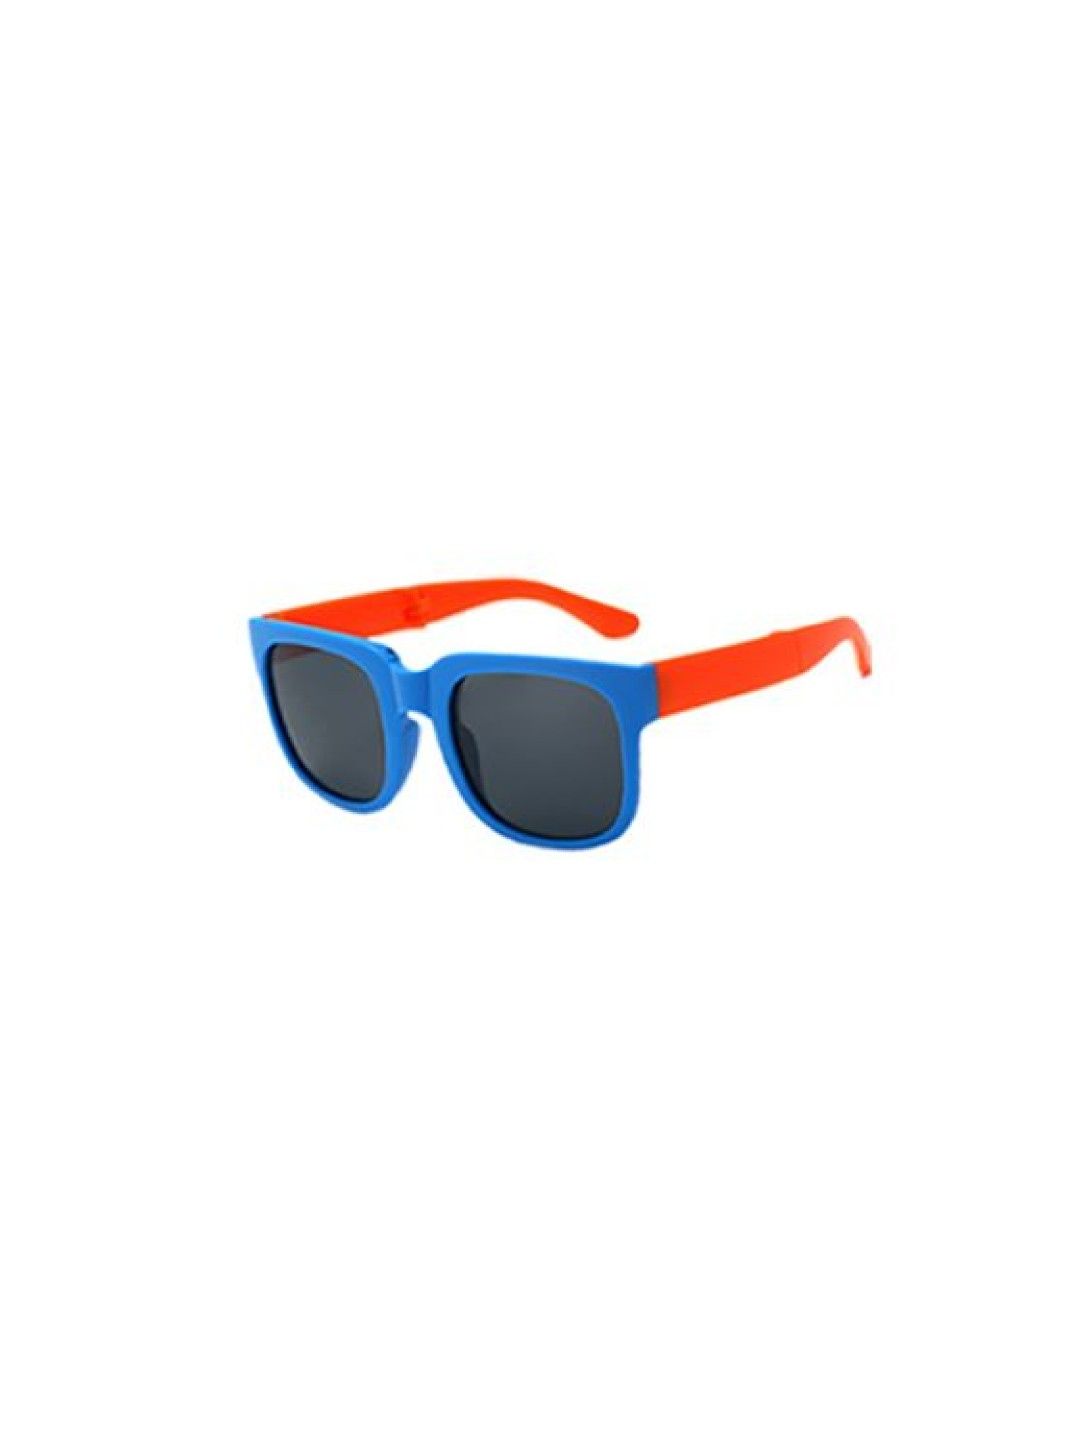 BabyPro Premium Luxury  Baby Sunglasses Kids Anti-ultraviolet